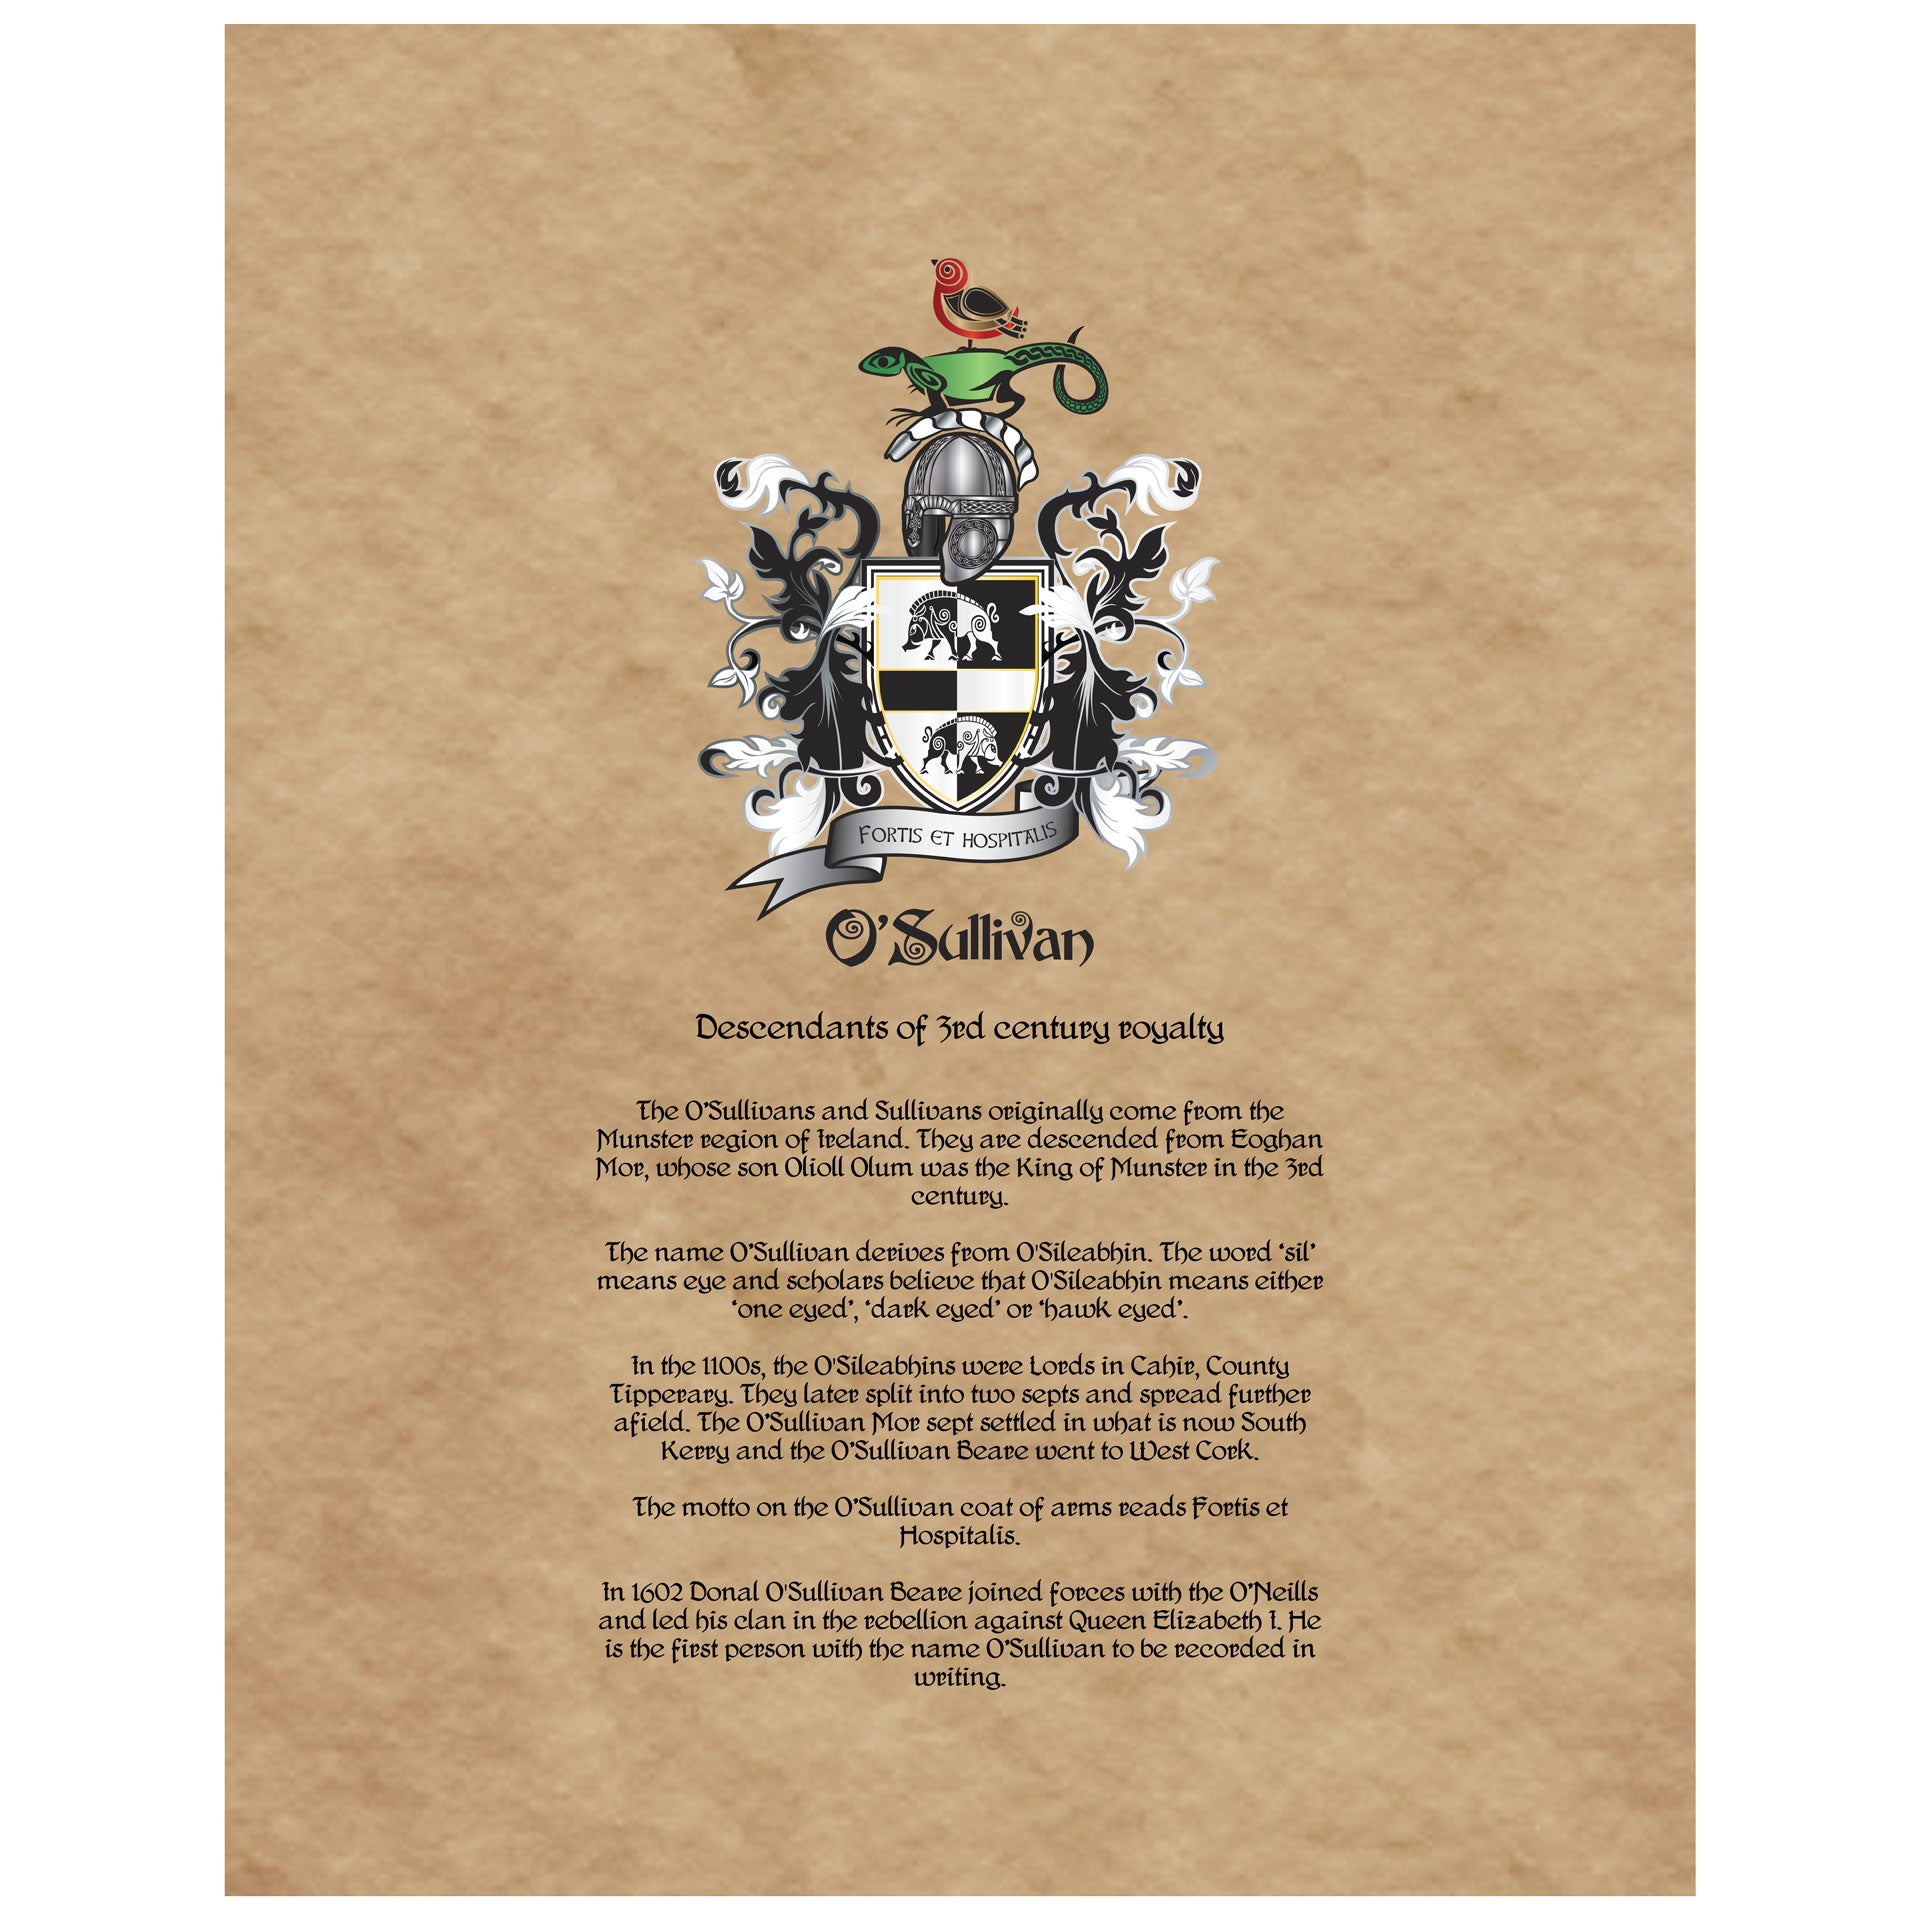 O'Sullivan (Beare) Coat of Arms Premium Luster Unframed Print